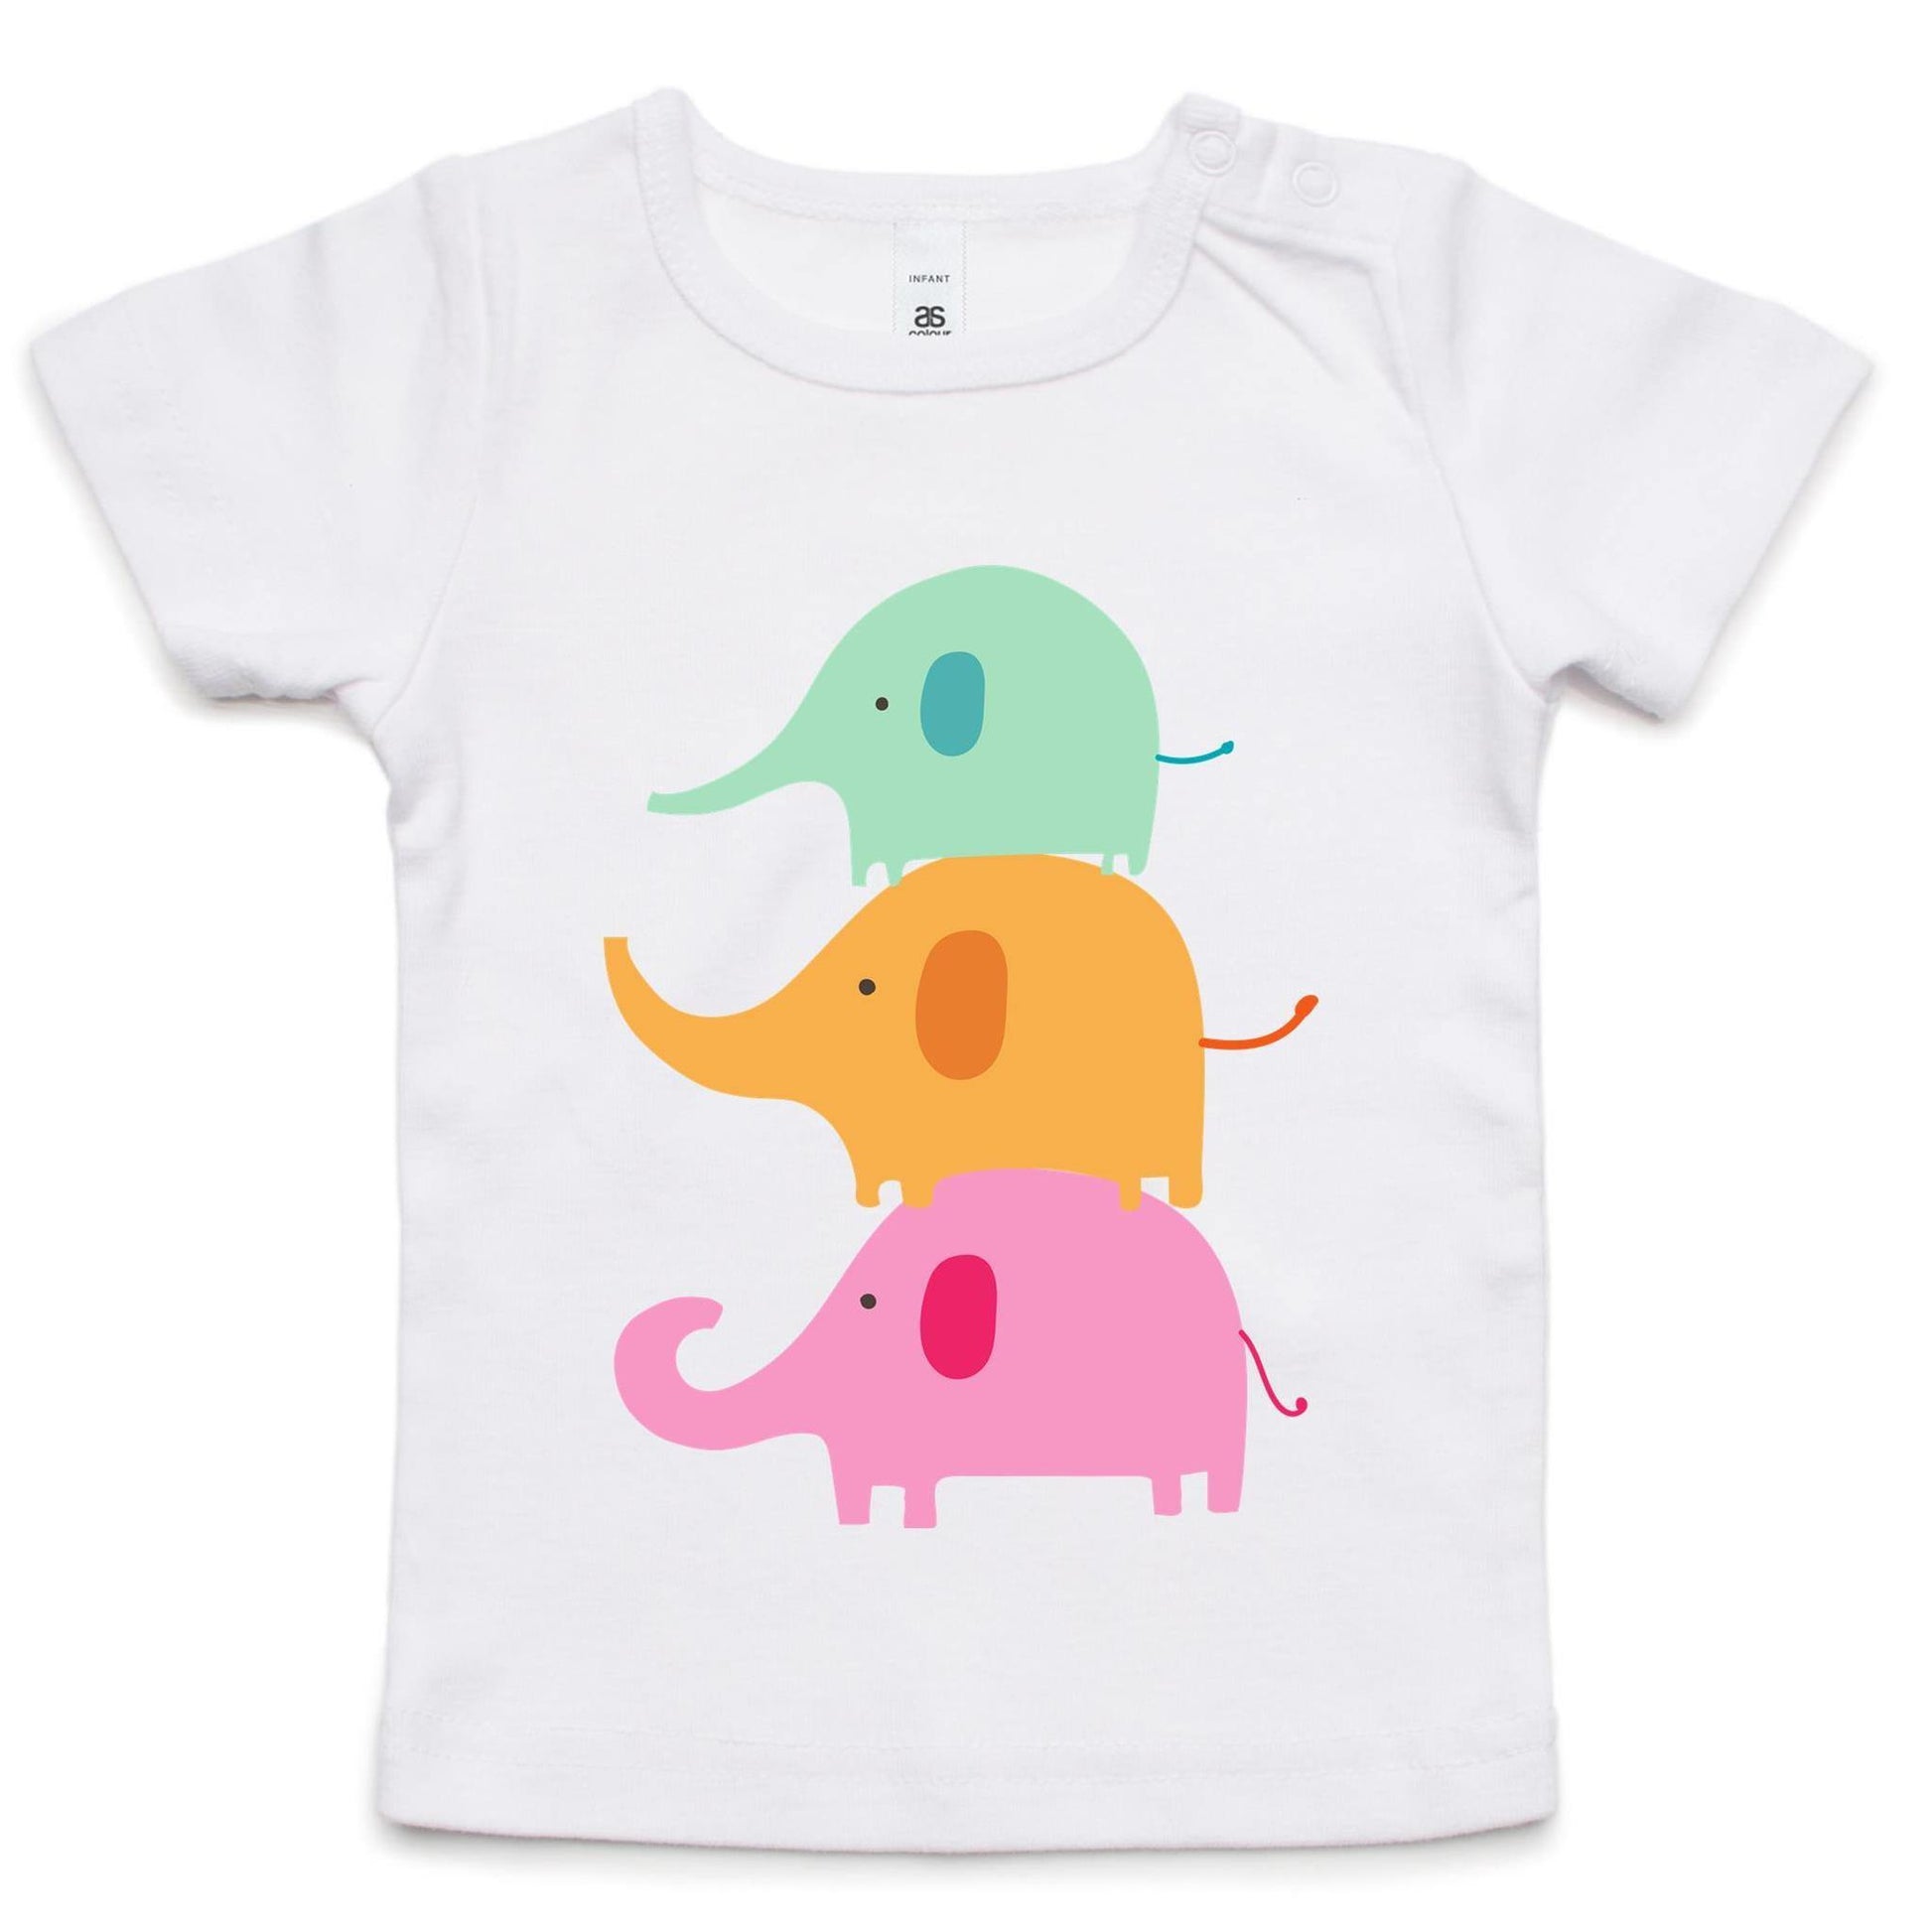 Three Cute Elephants - Baby T-shirt White Baby T-shirt animal kids